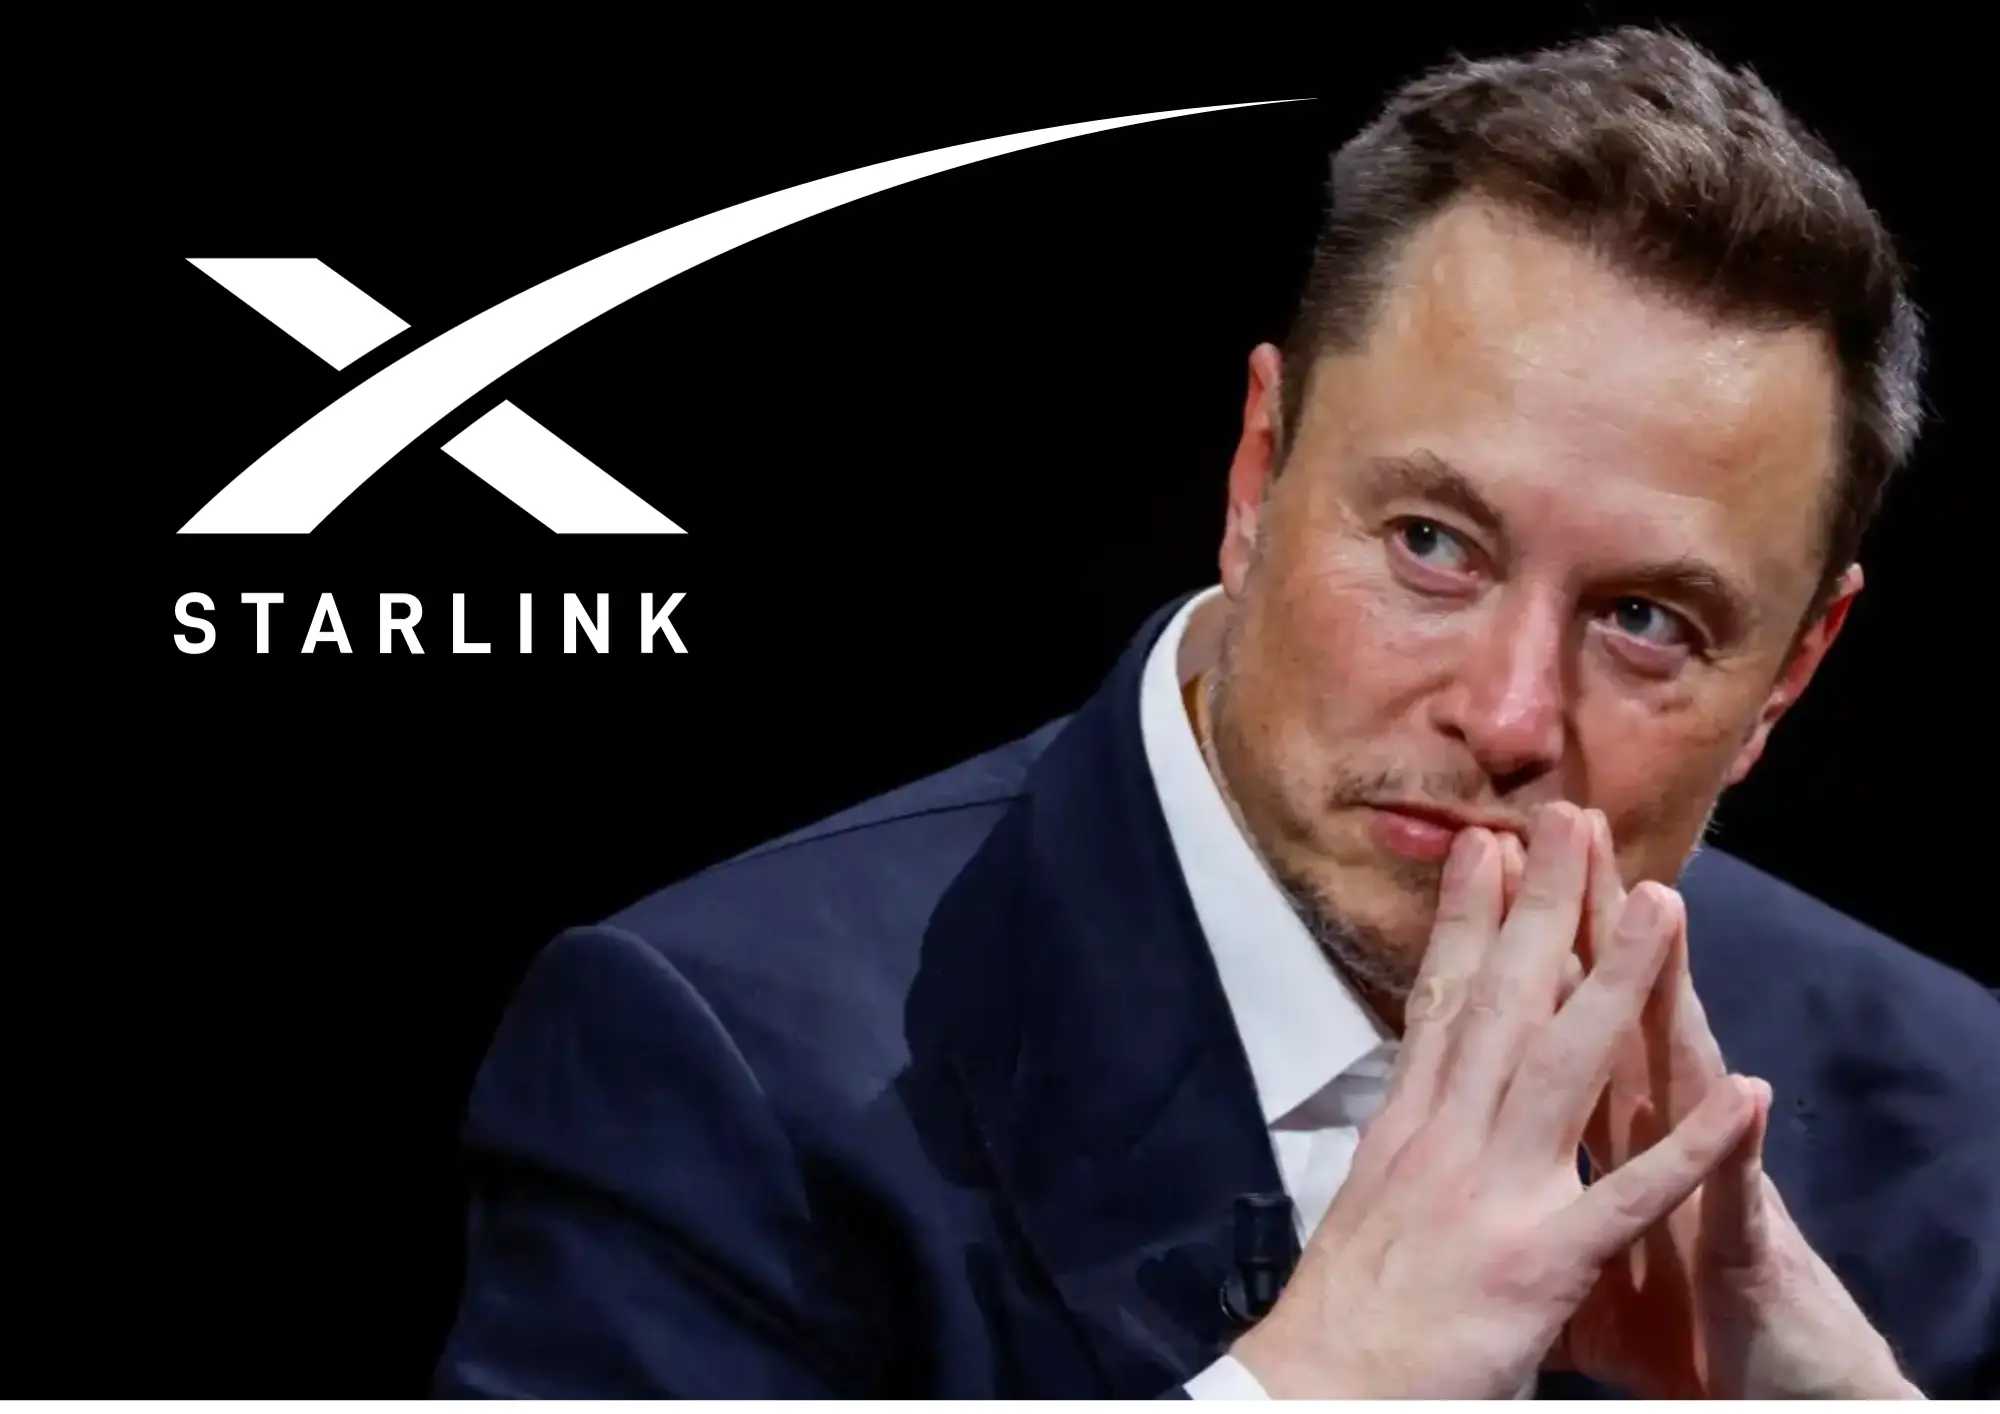 Starlink Elon Musk